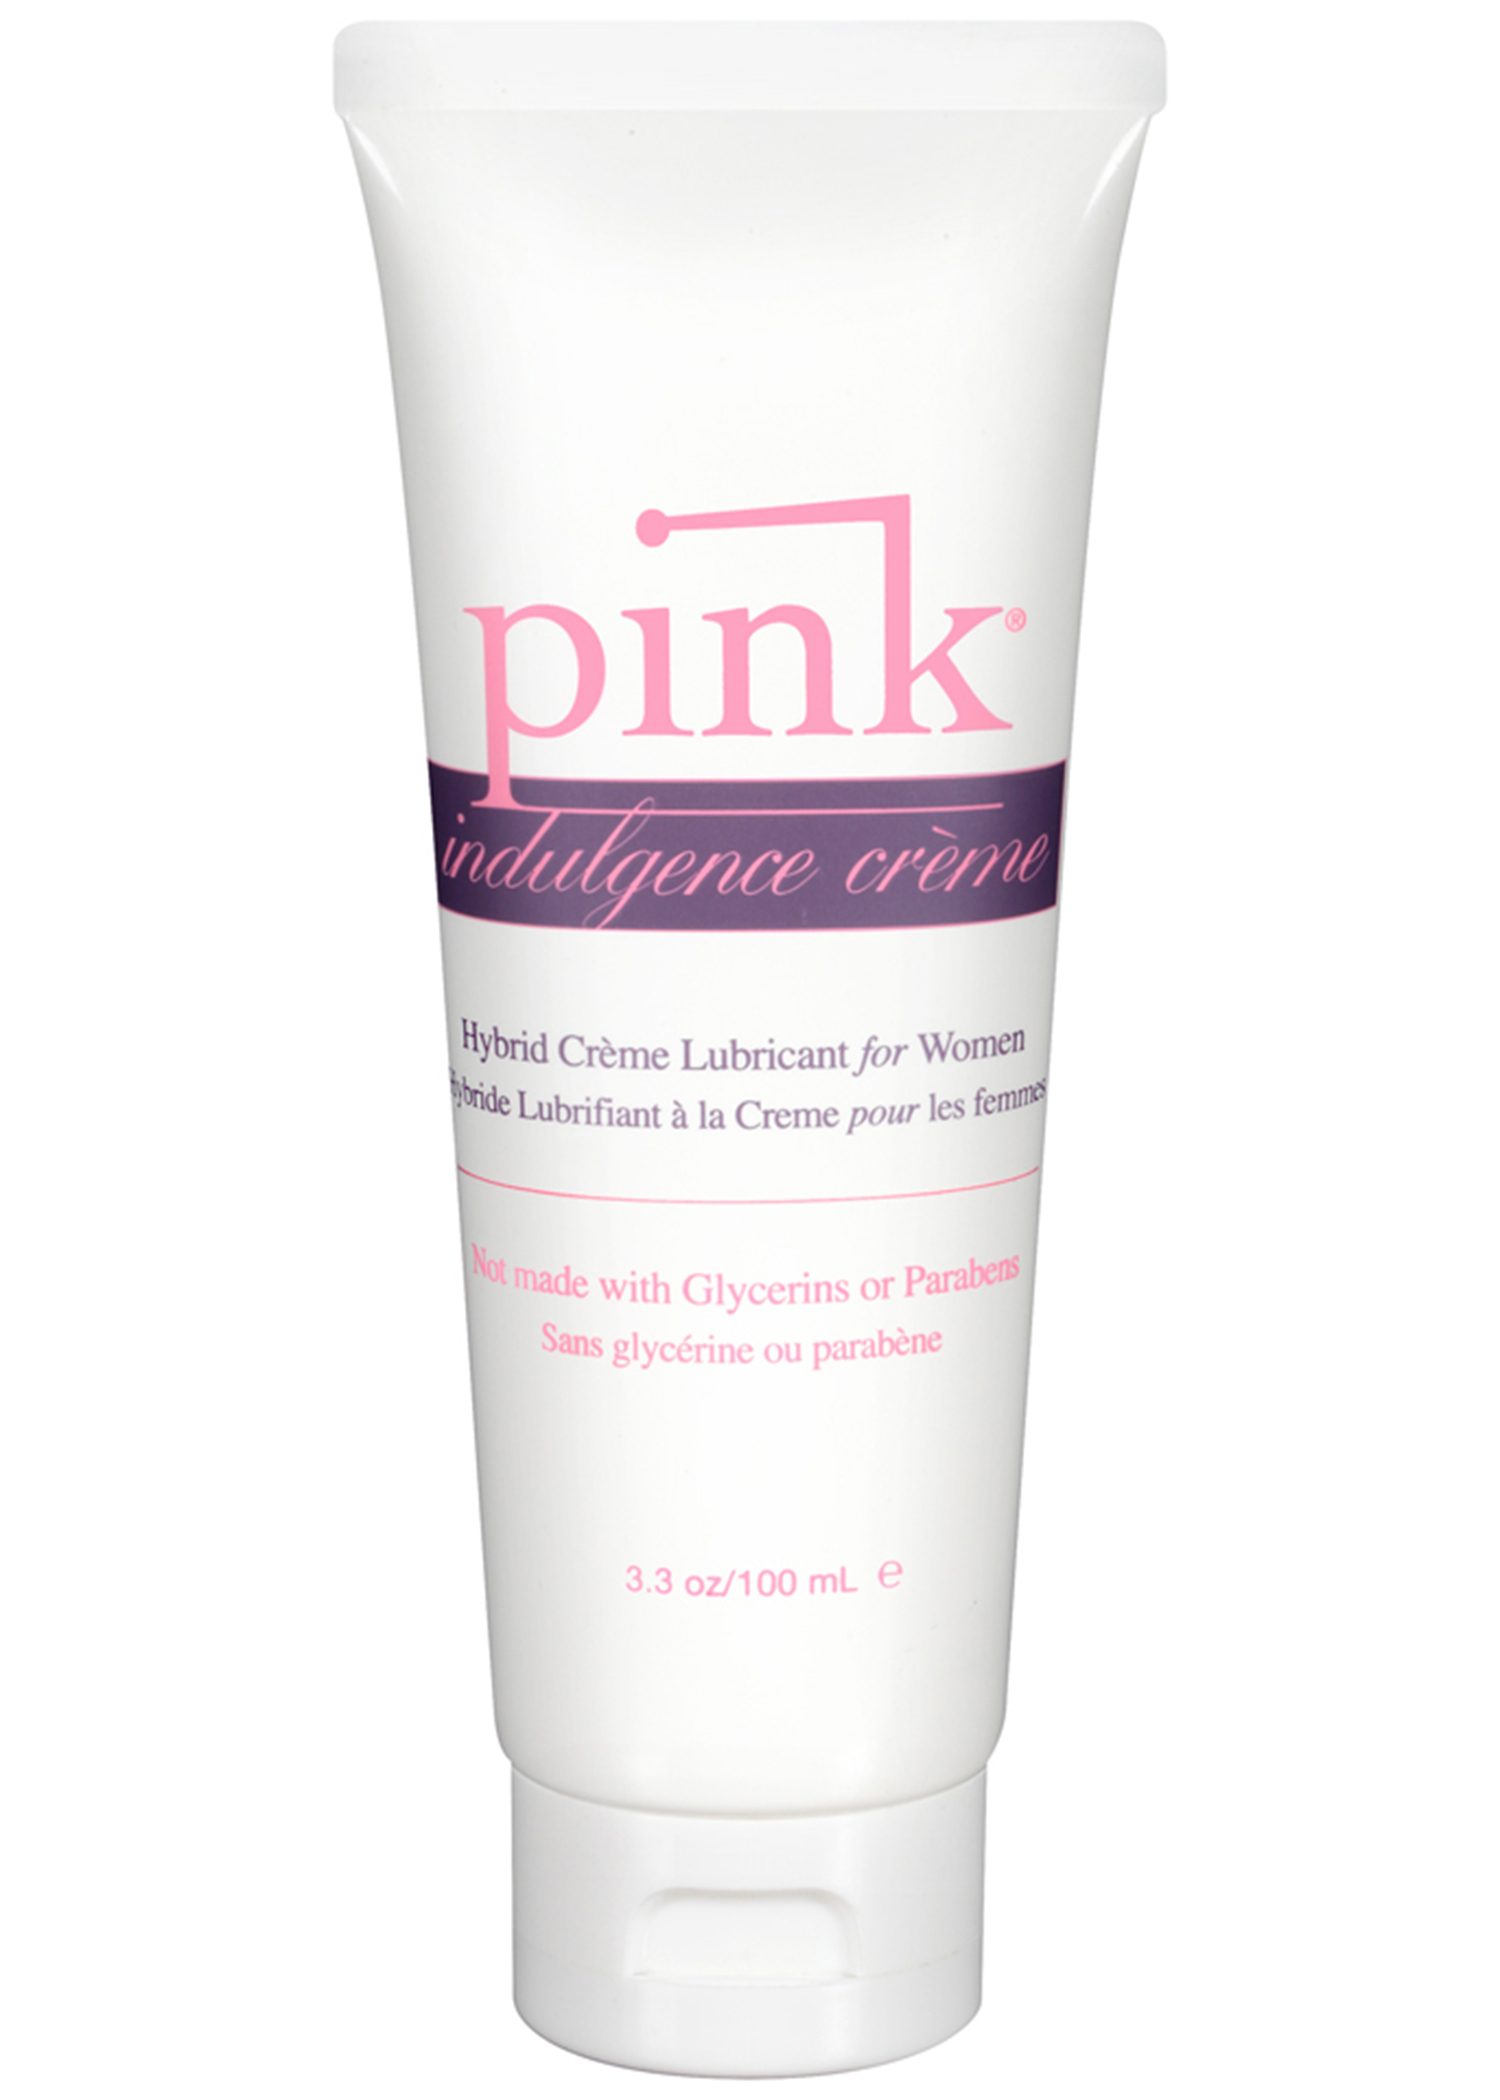 pink indulgence creme hybrid lubricant for women  oz  ml .JPG